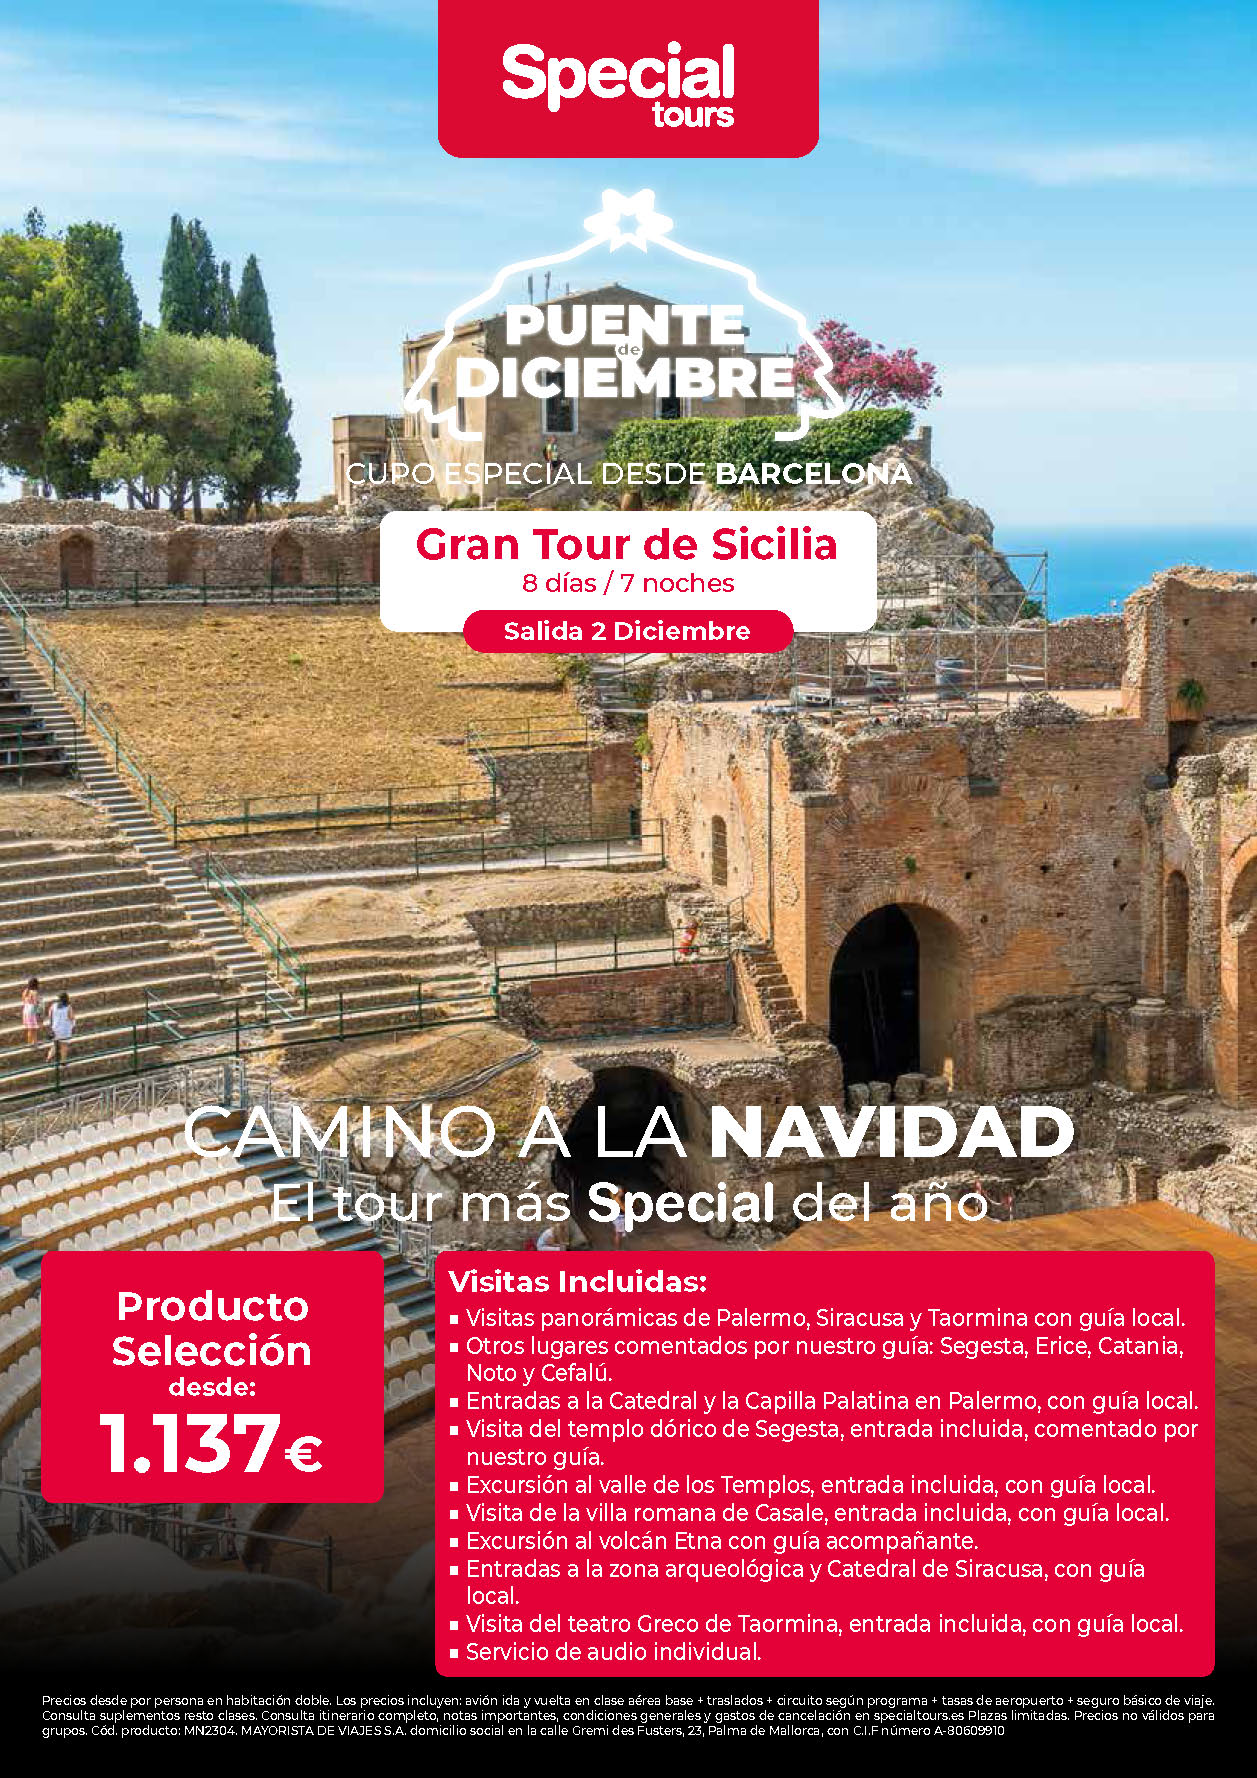 Oferta Special Tours Puente de Diciembre Gran Tour de Sicilia 8 dias salida 2 Diciembre vuelo directo desde Barcelona